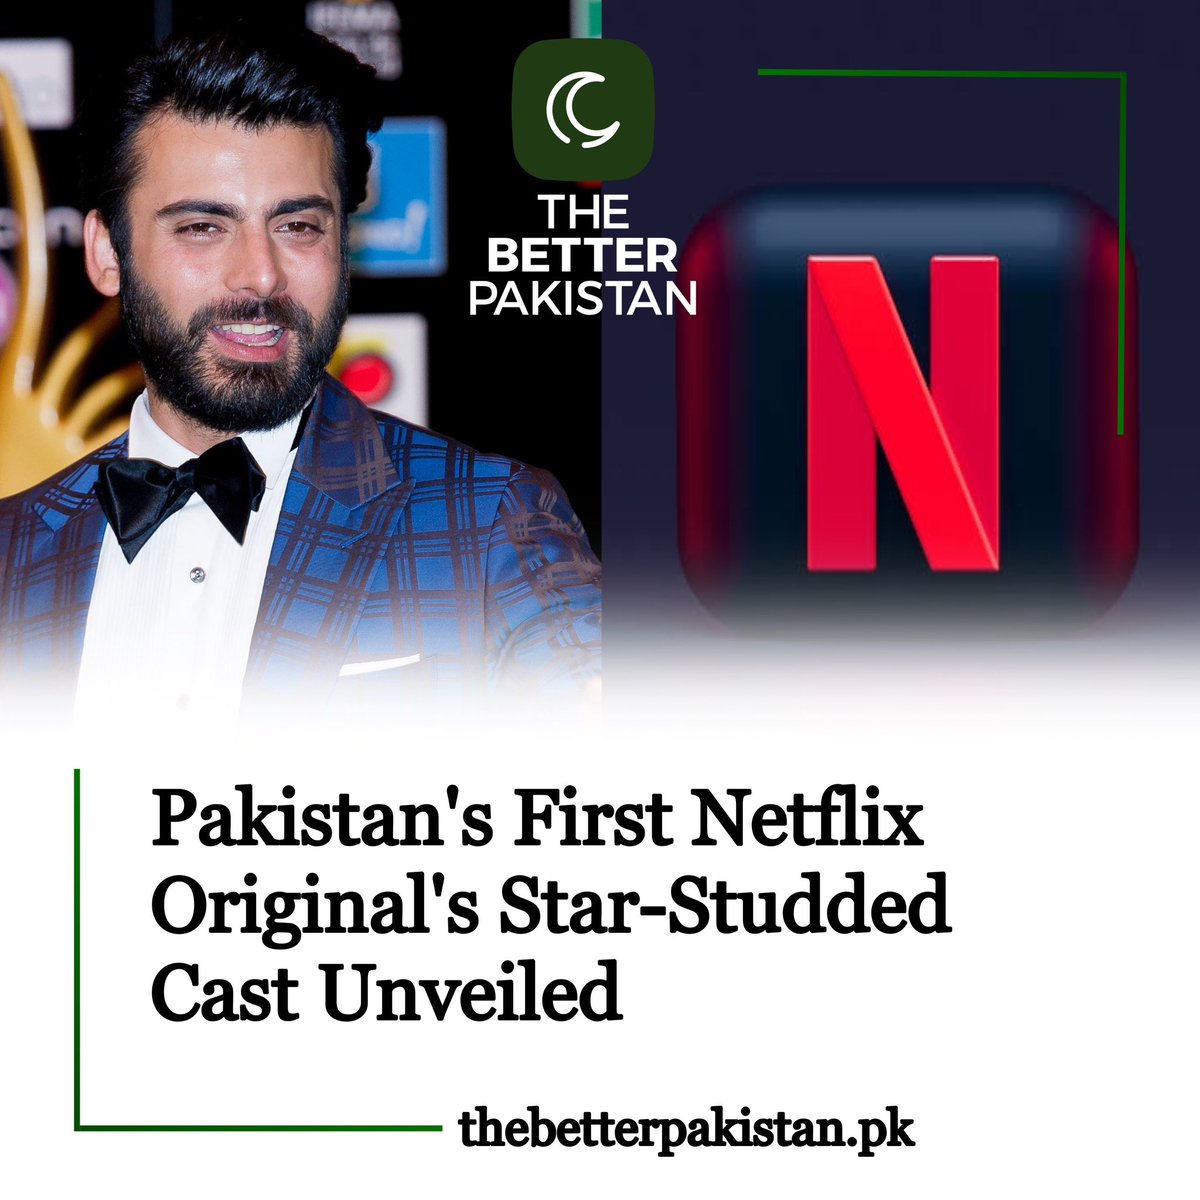 Read More: thebetterpakistan.pk/pakistans-firs…

#fawadkhan #pakistan #netflix #NetflixOriginal #hamzaaliabbasi #haniaamir #mahirakhan #mominaduraid